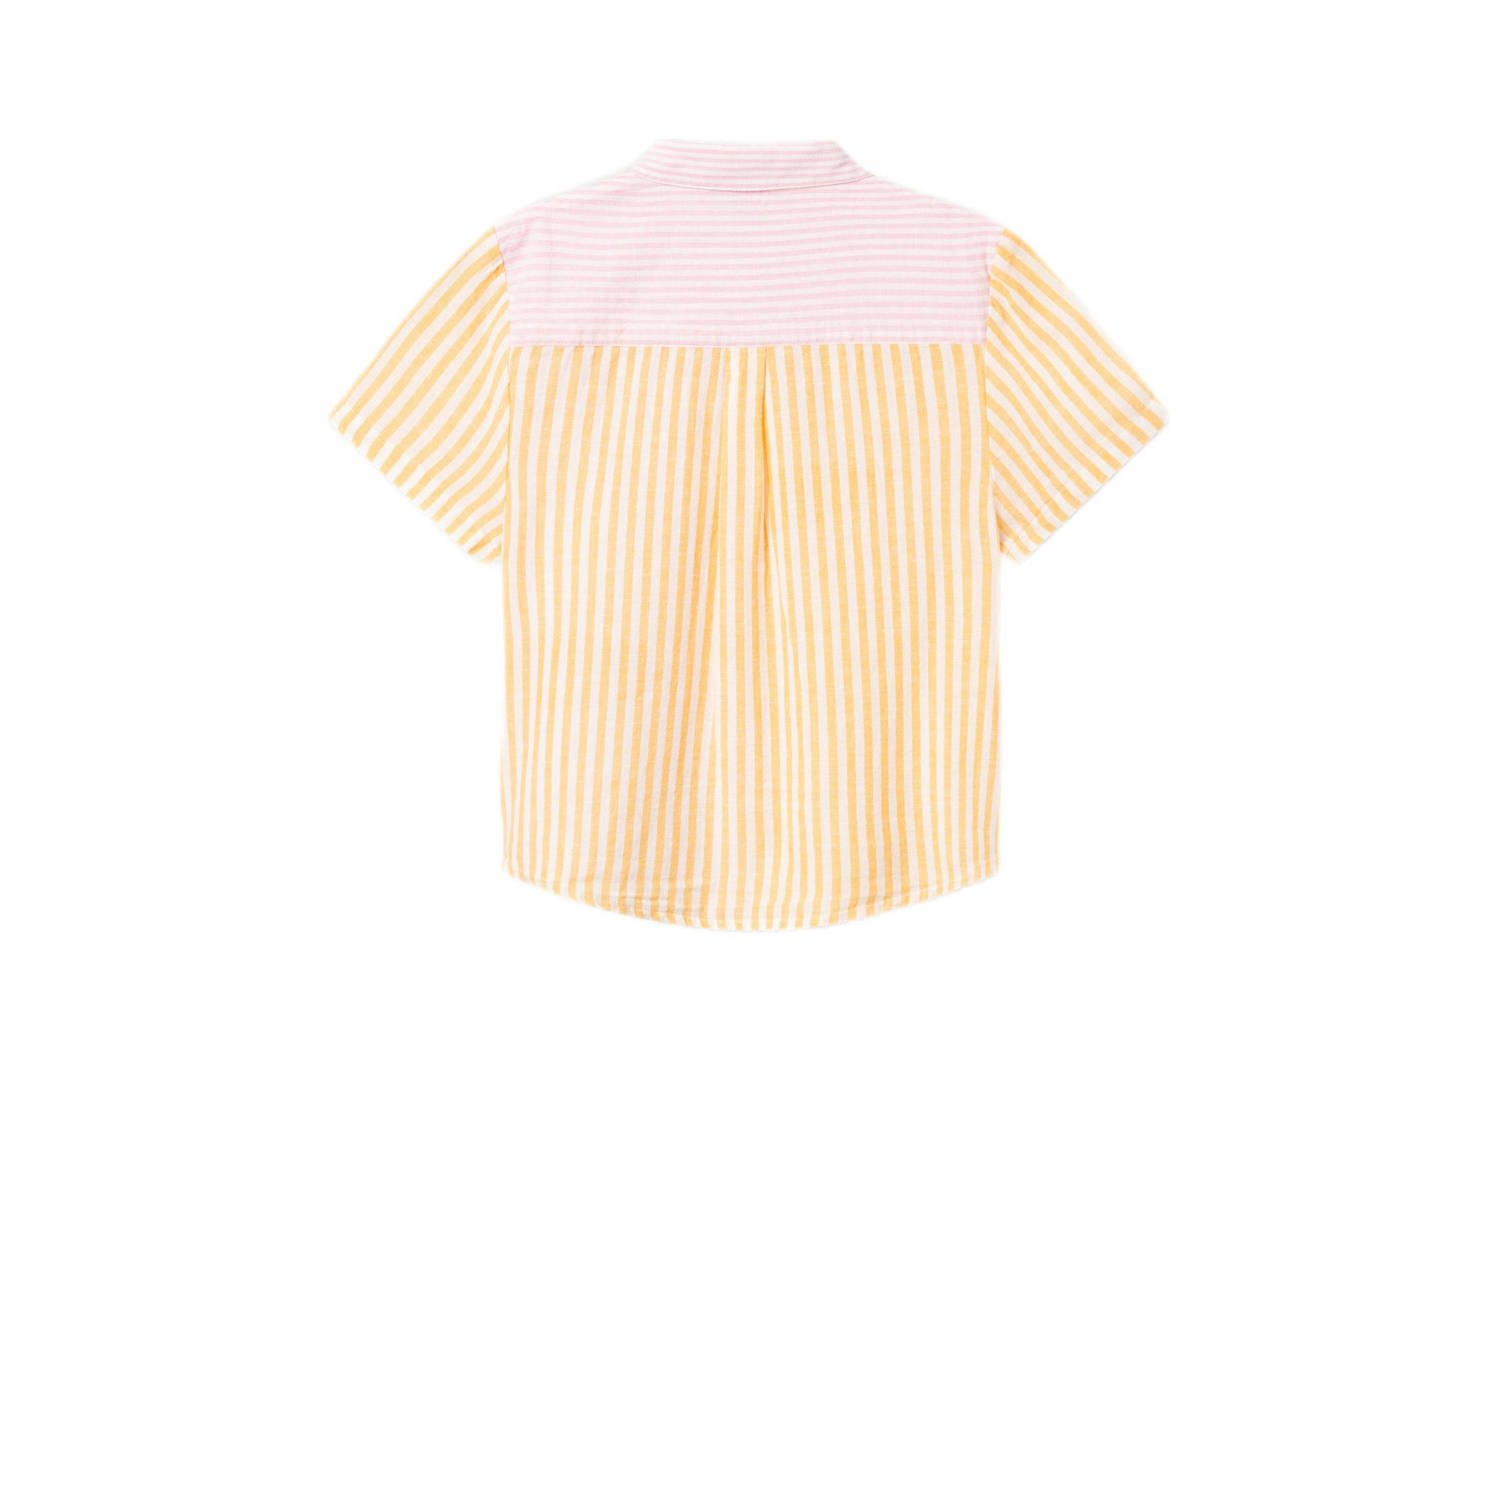 NAME IT KIDS gestreepte blouse NKFHISTRIPE roze geel